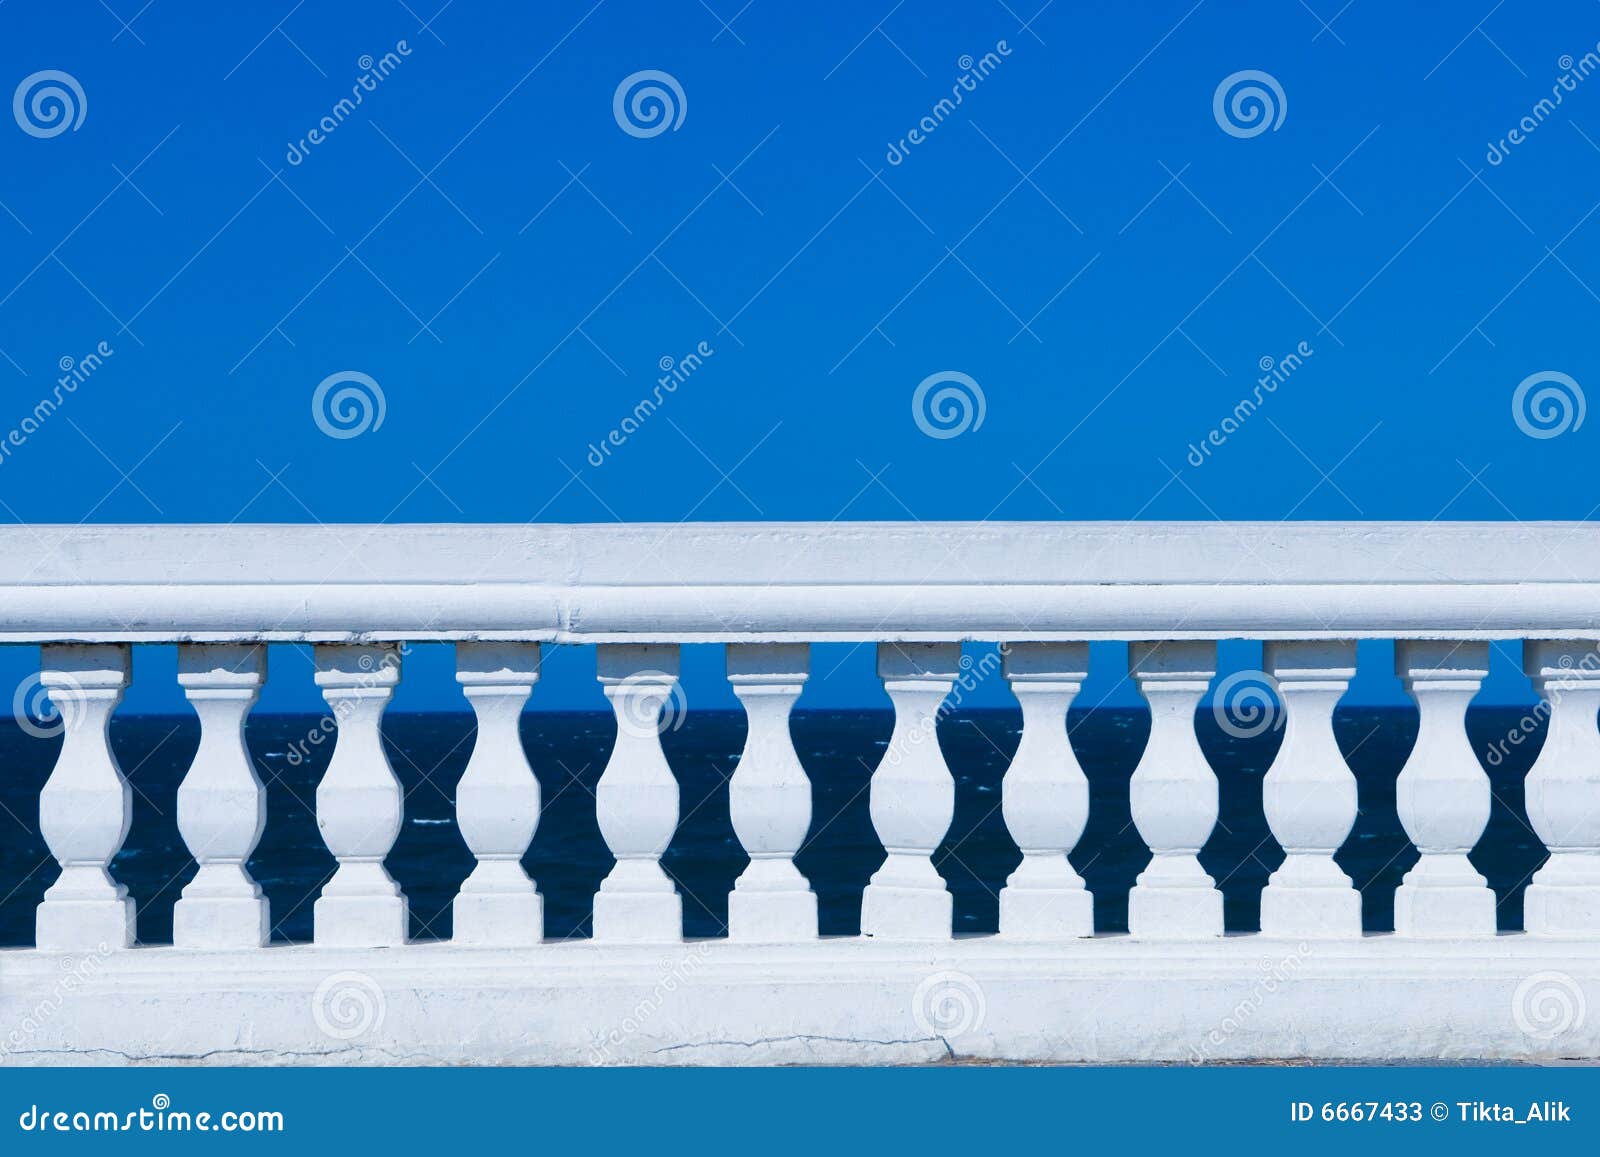 balustrade on blue